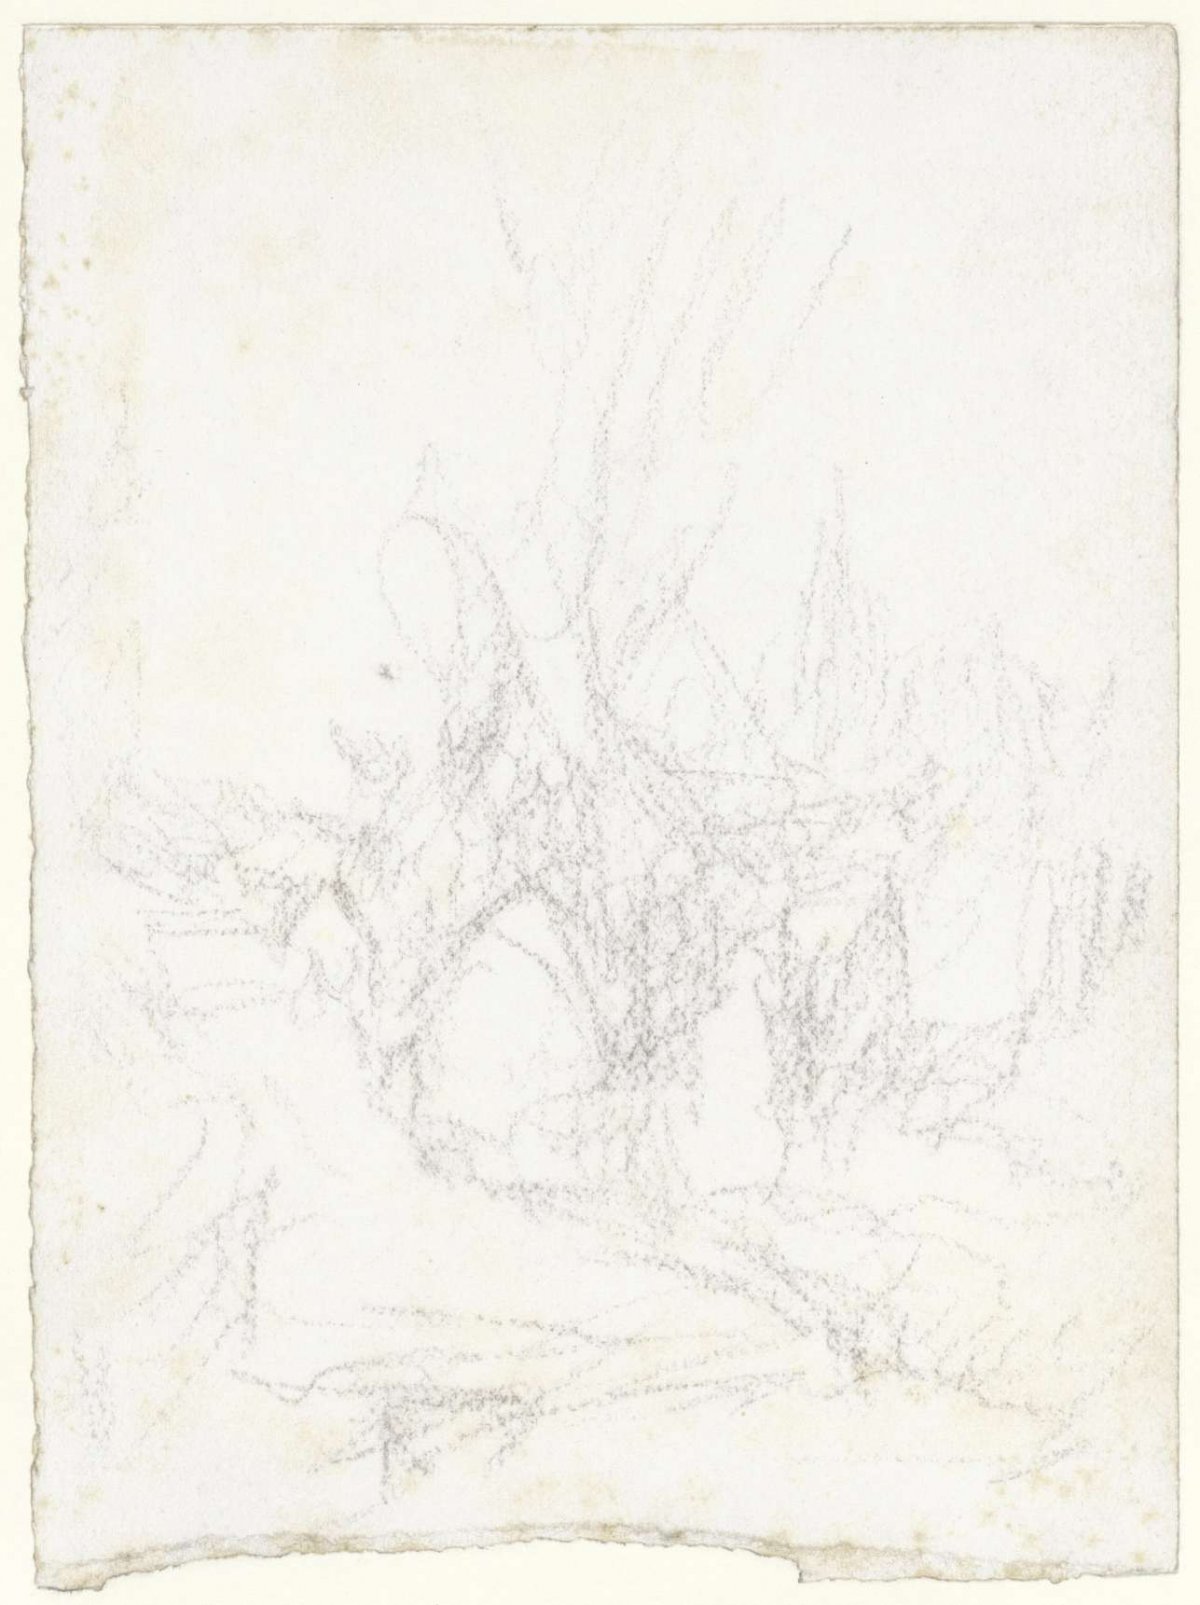 Sketch of a landscape, Matthijs Maris, 1849 - 1917